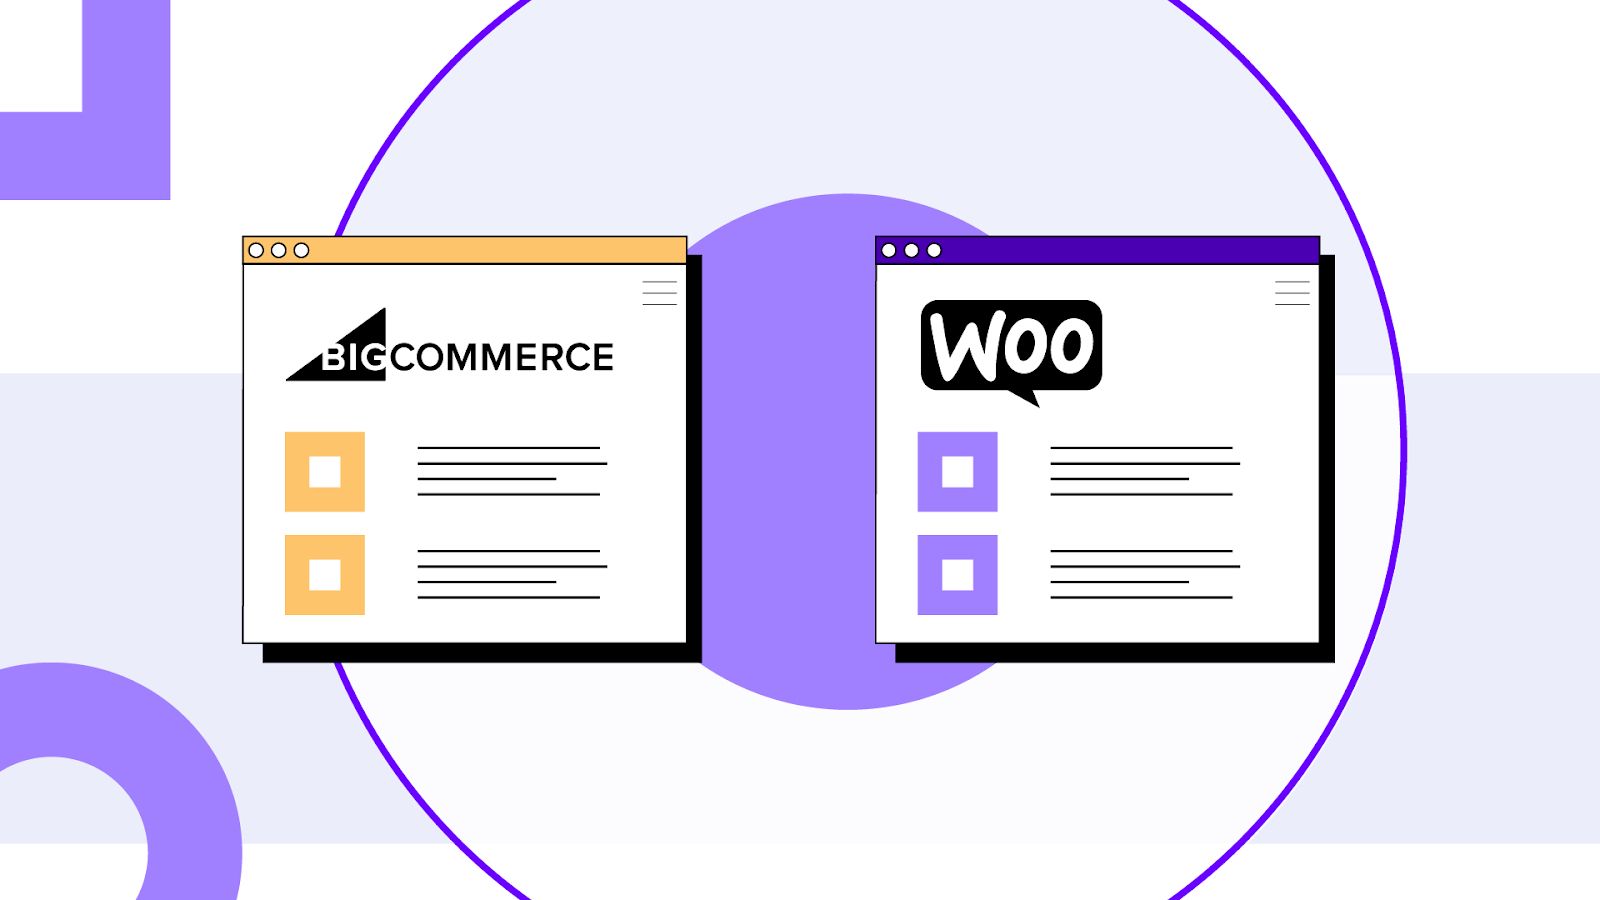 Advantages of BigCommerce over WooCommerce